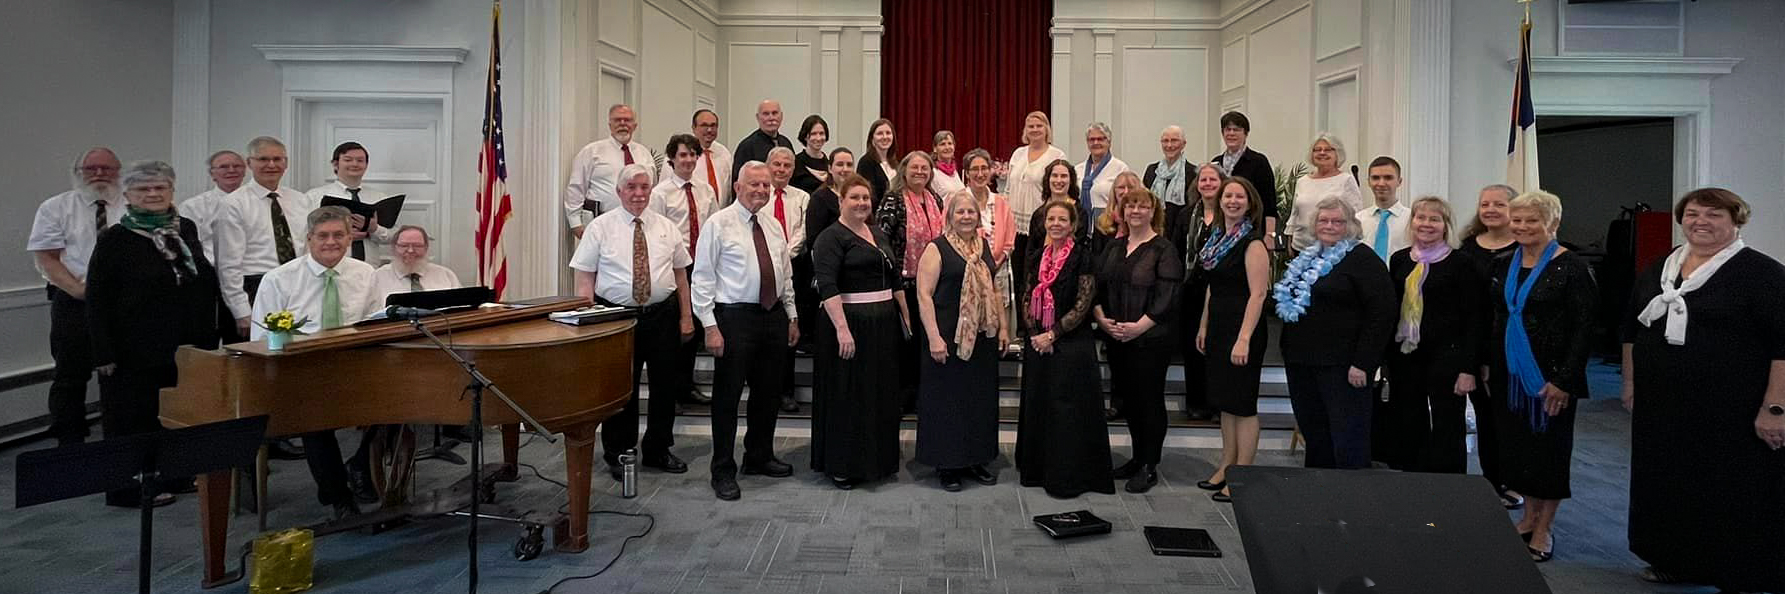 Gardner-community-Choir